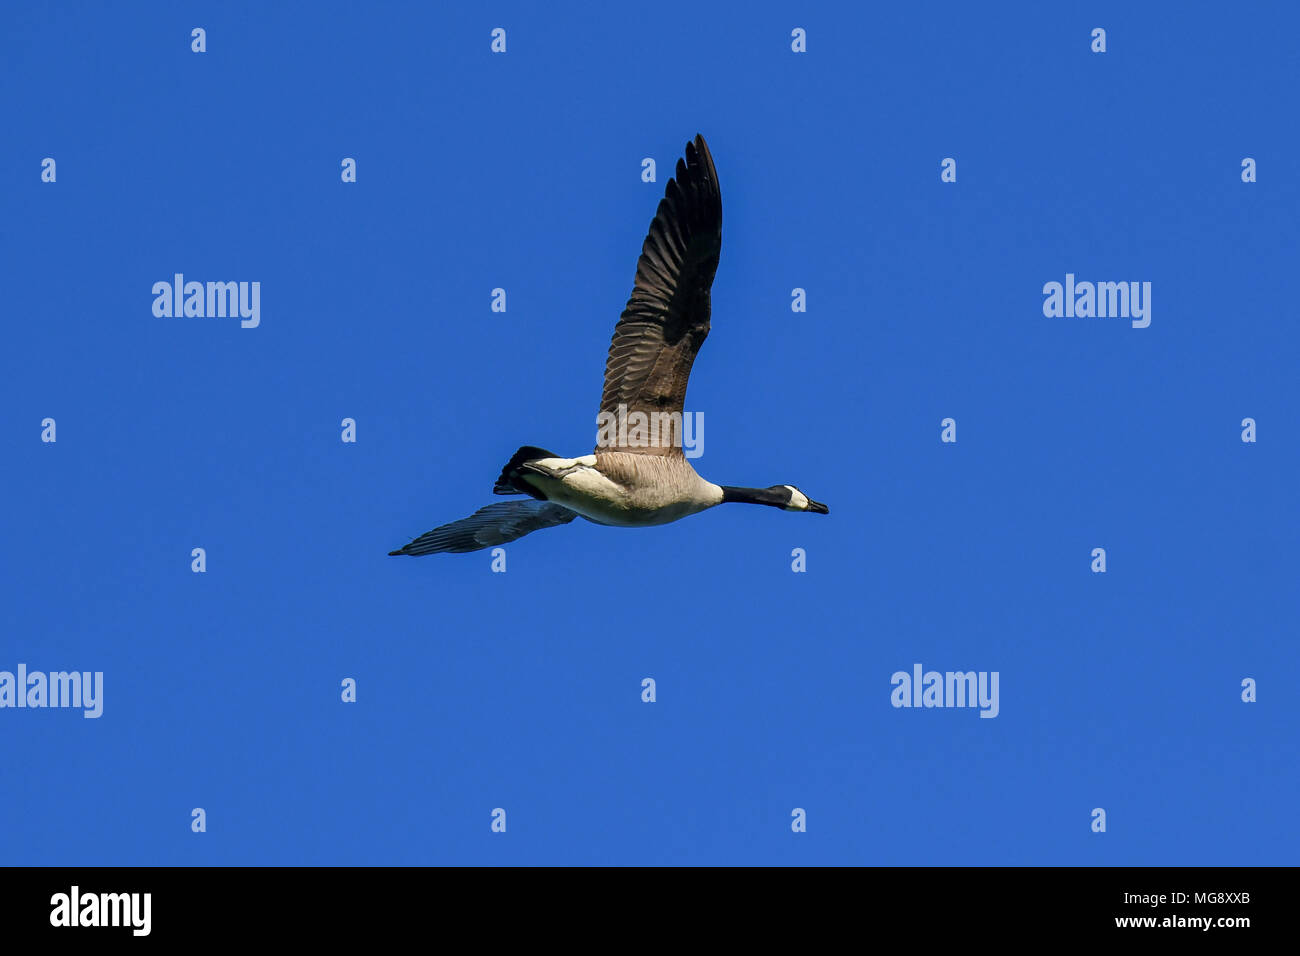 A canada goose flies overhead against a bright blue sky Stock Photo